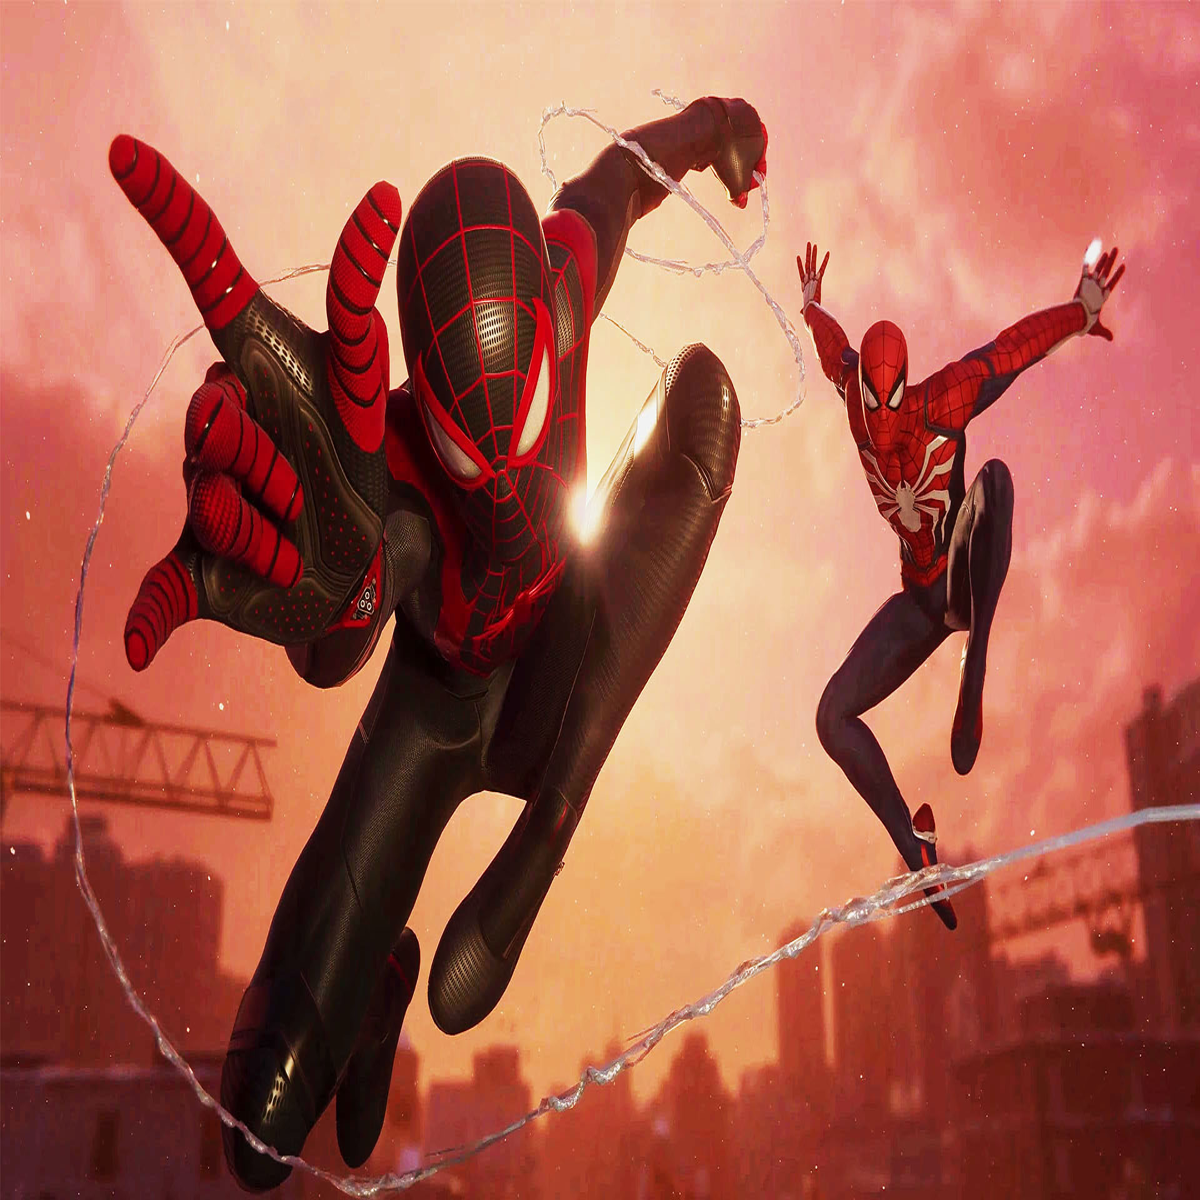 Spider-Man 2 - Gameplay Walkthrough Part 1 - Peter Parker and Miles Morales  Fight Sandman! 